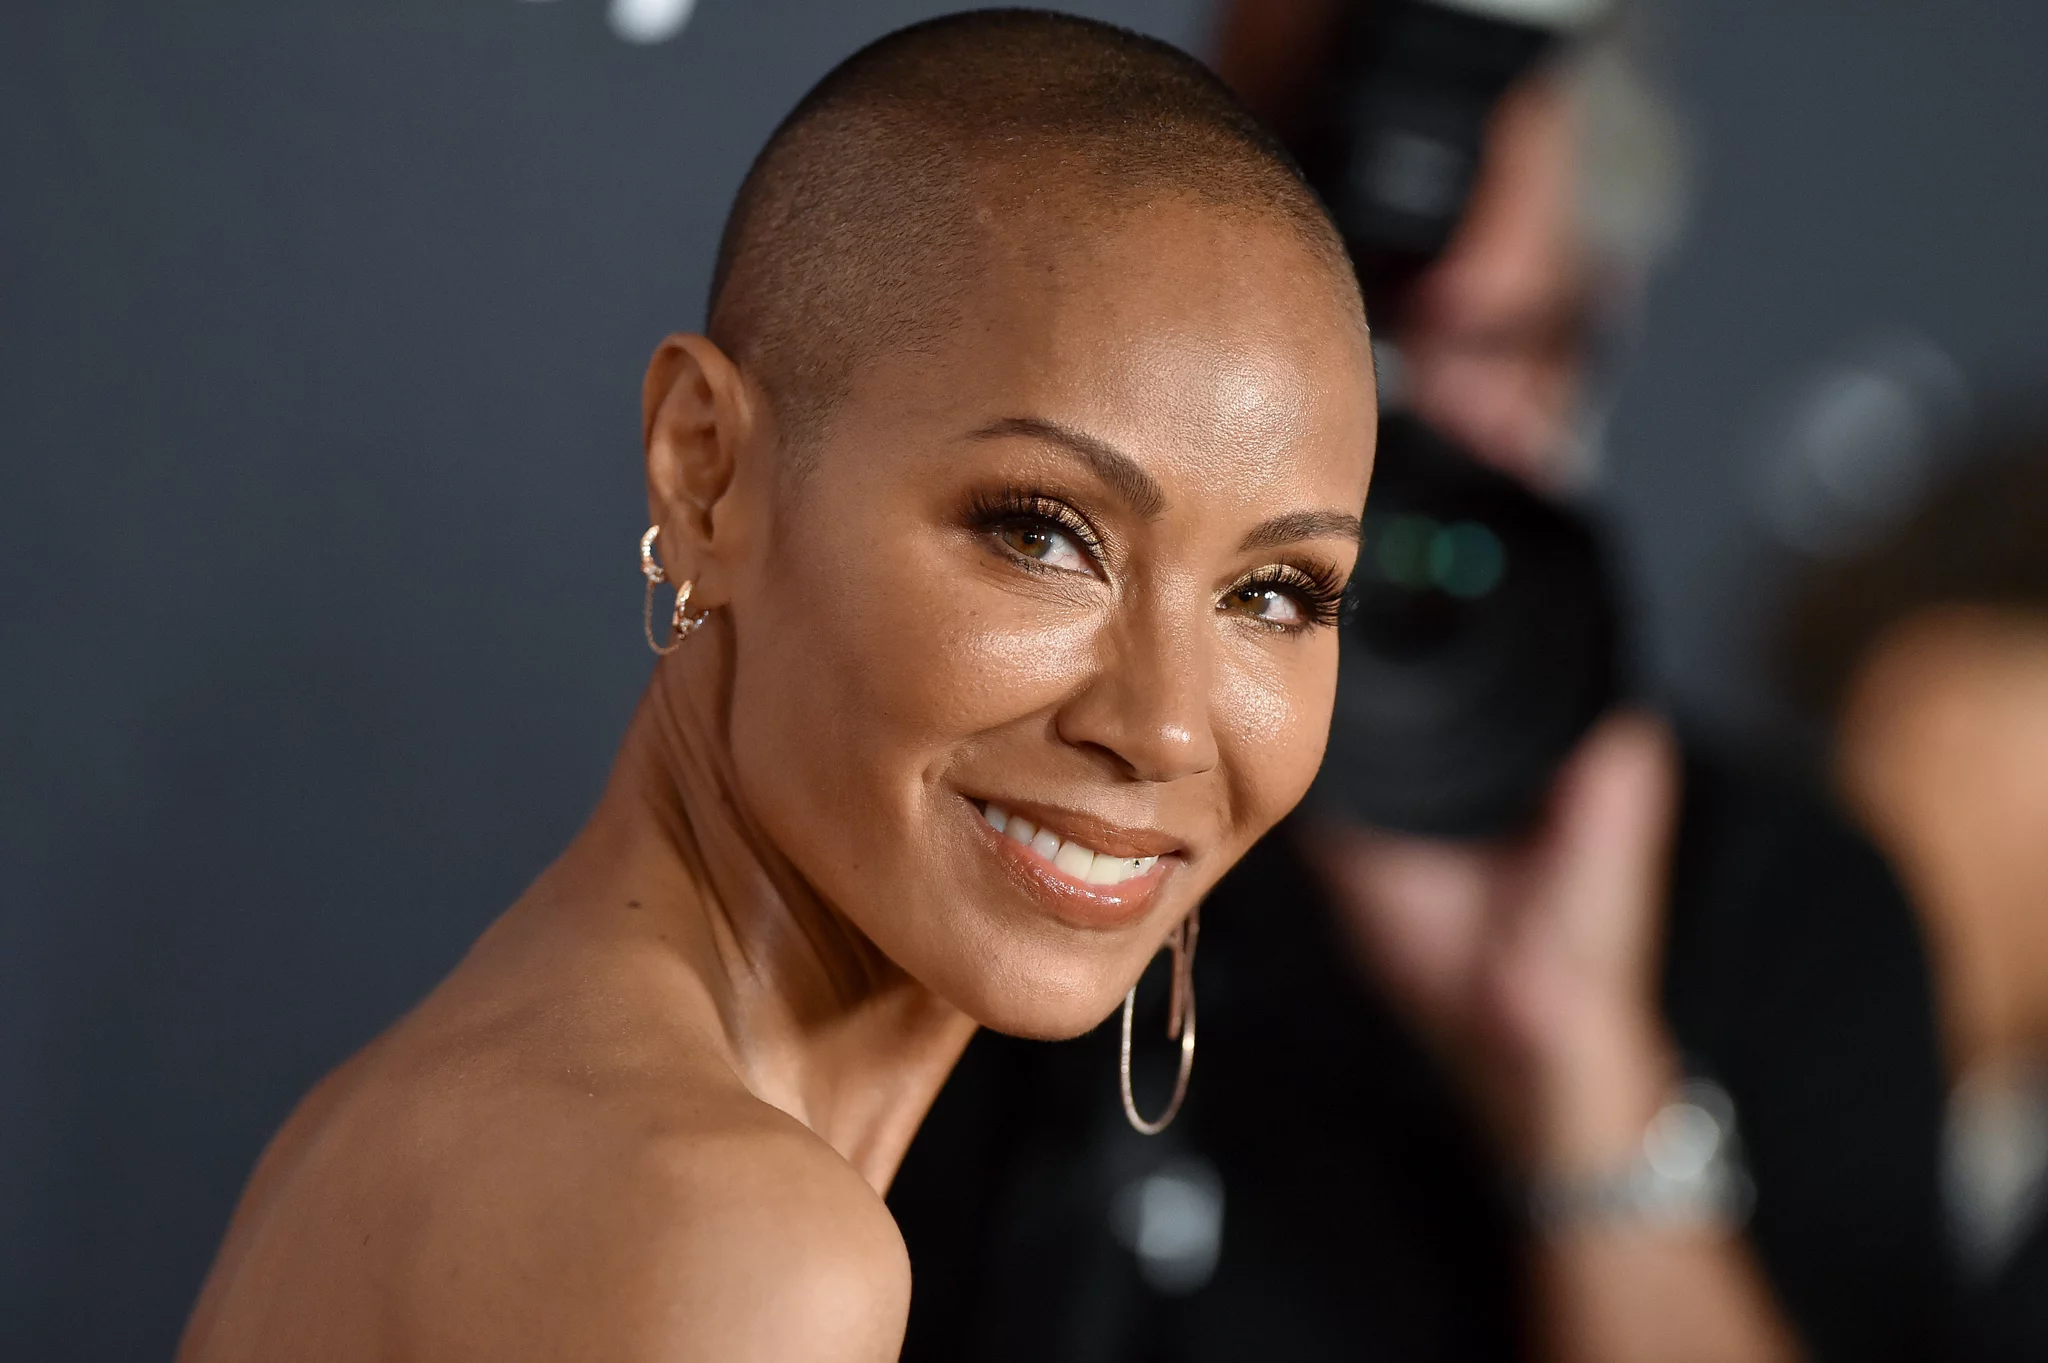 Six months after Chris Rock’s Oscars joke, Jada Pinkett Smith observes “Bald Is Beautiful” Day.